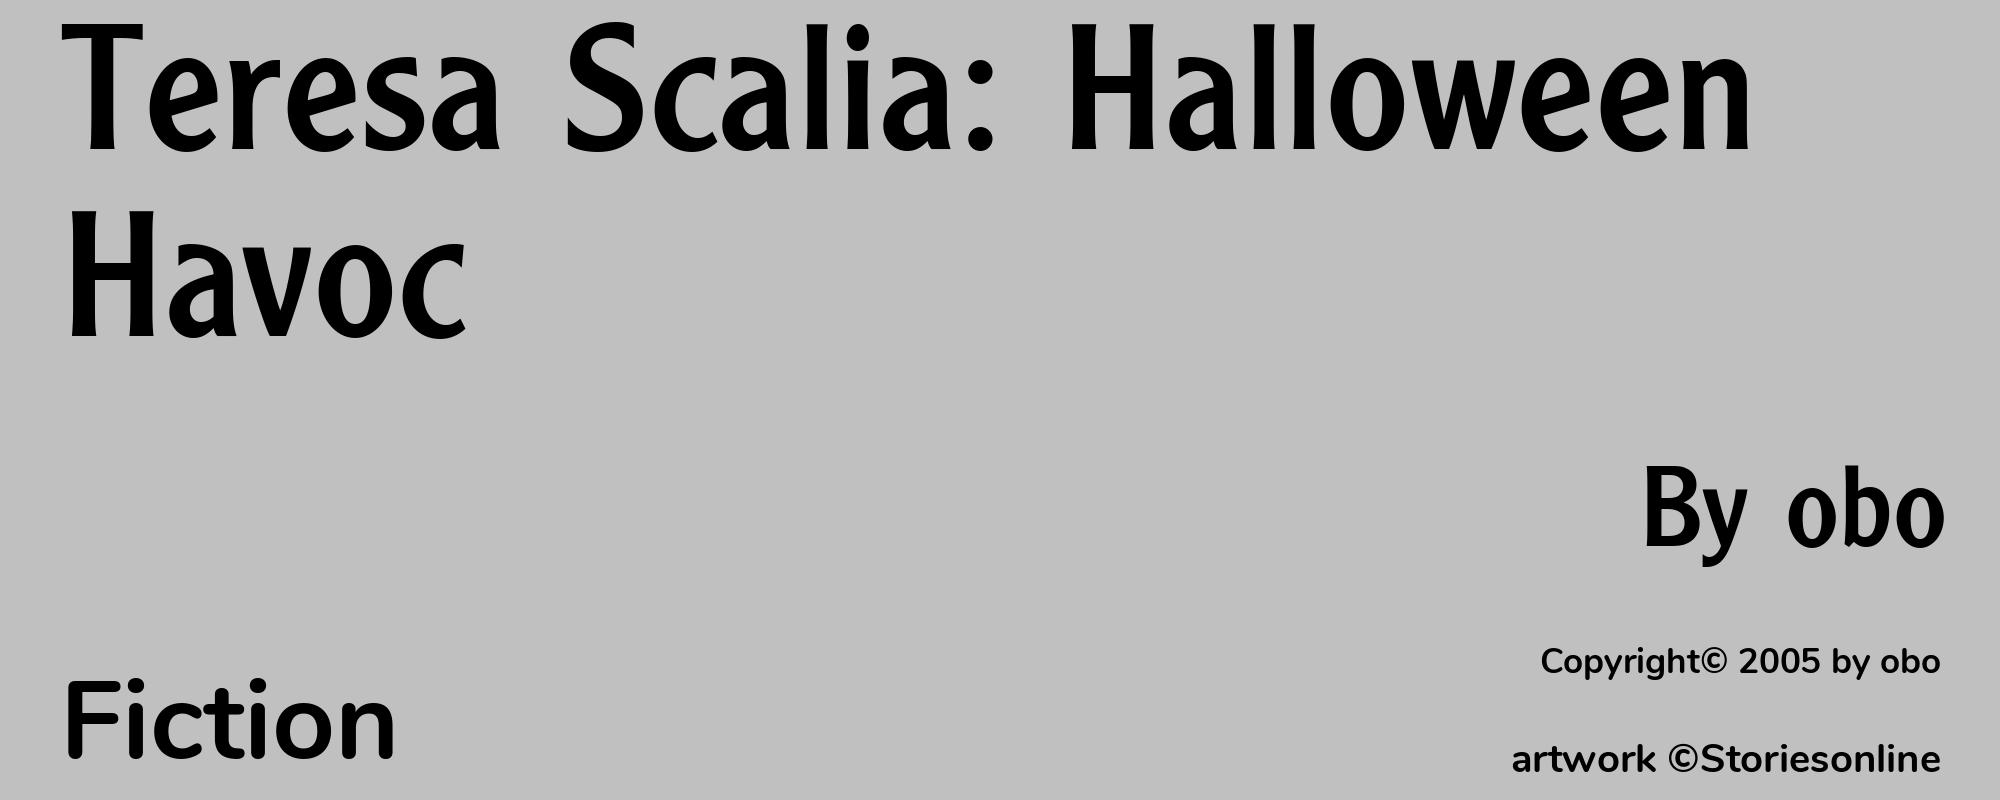 Teresa Scalia: Halloween Havoc - Cover